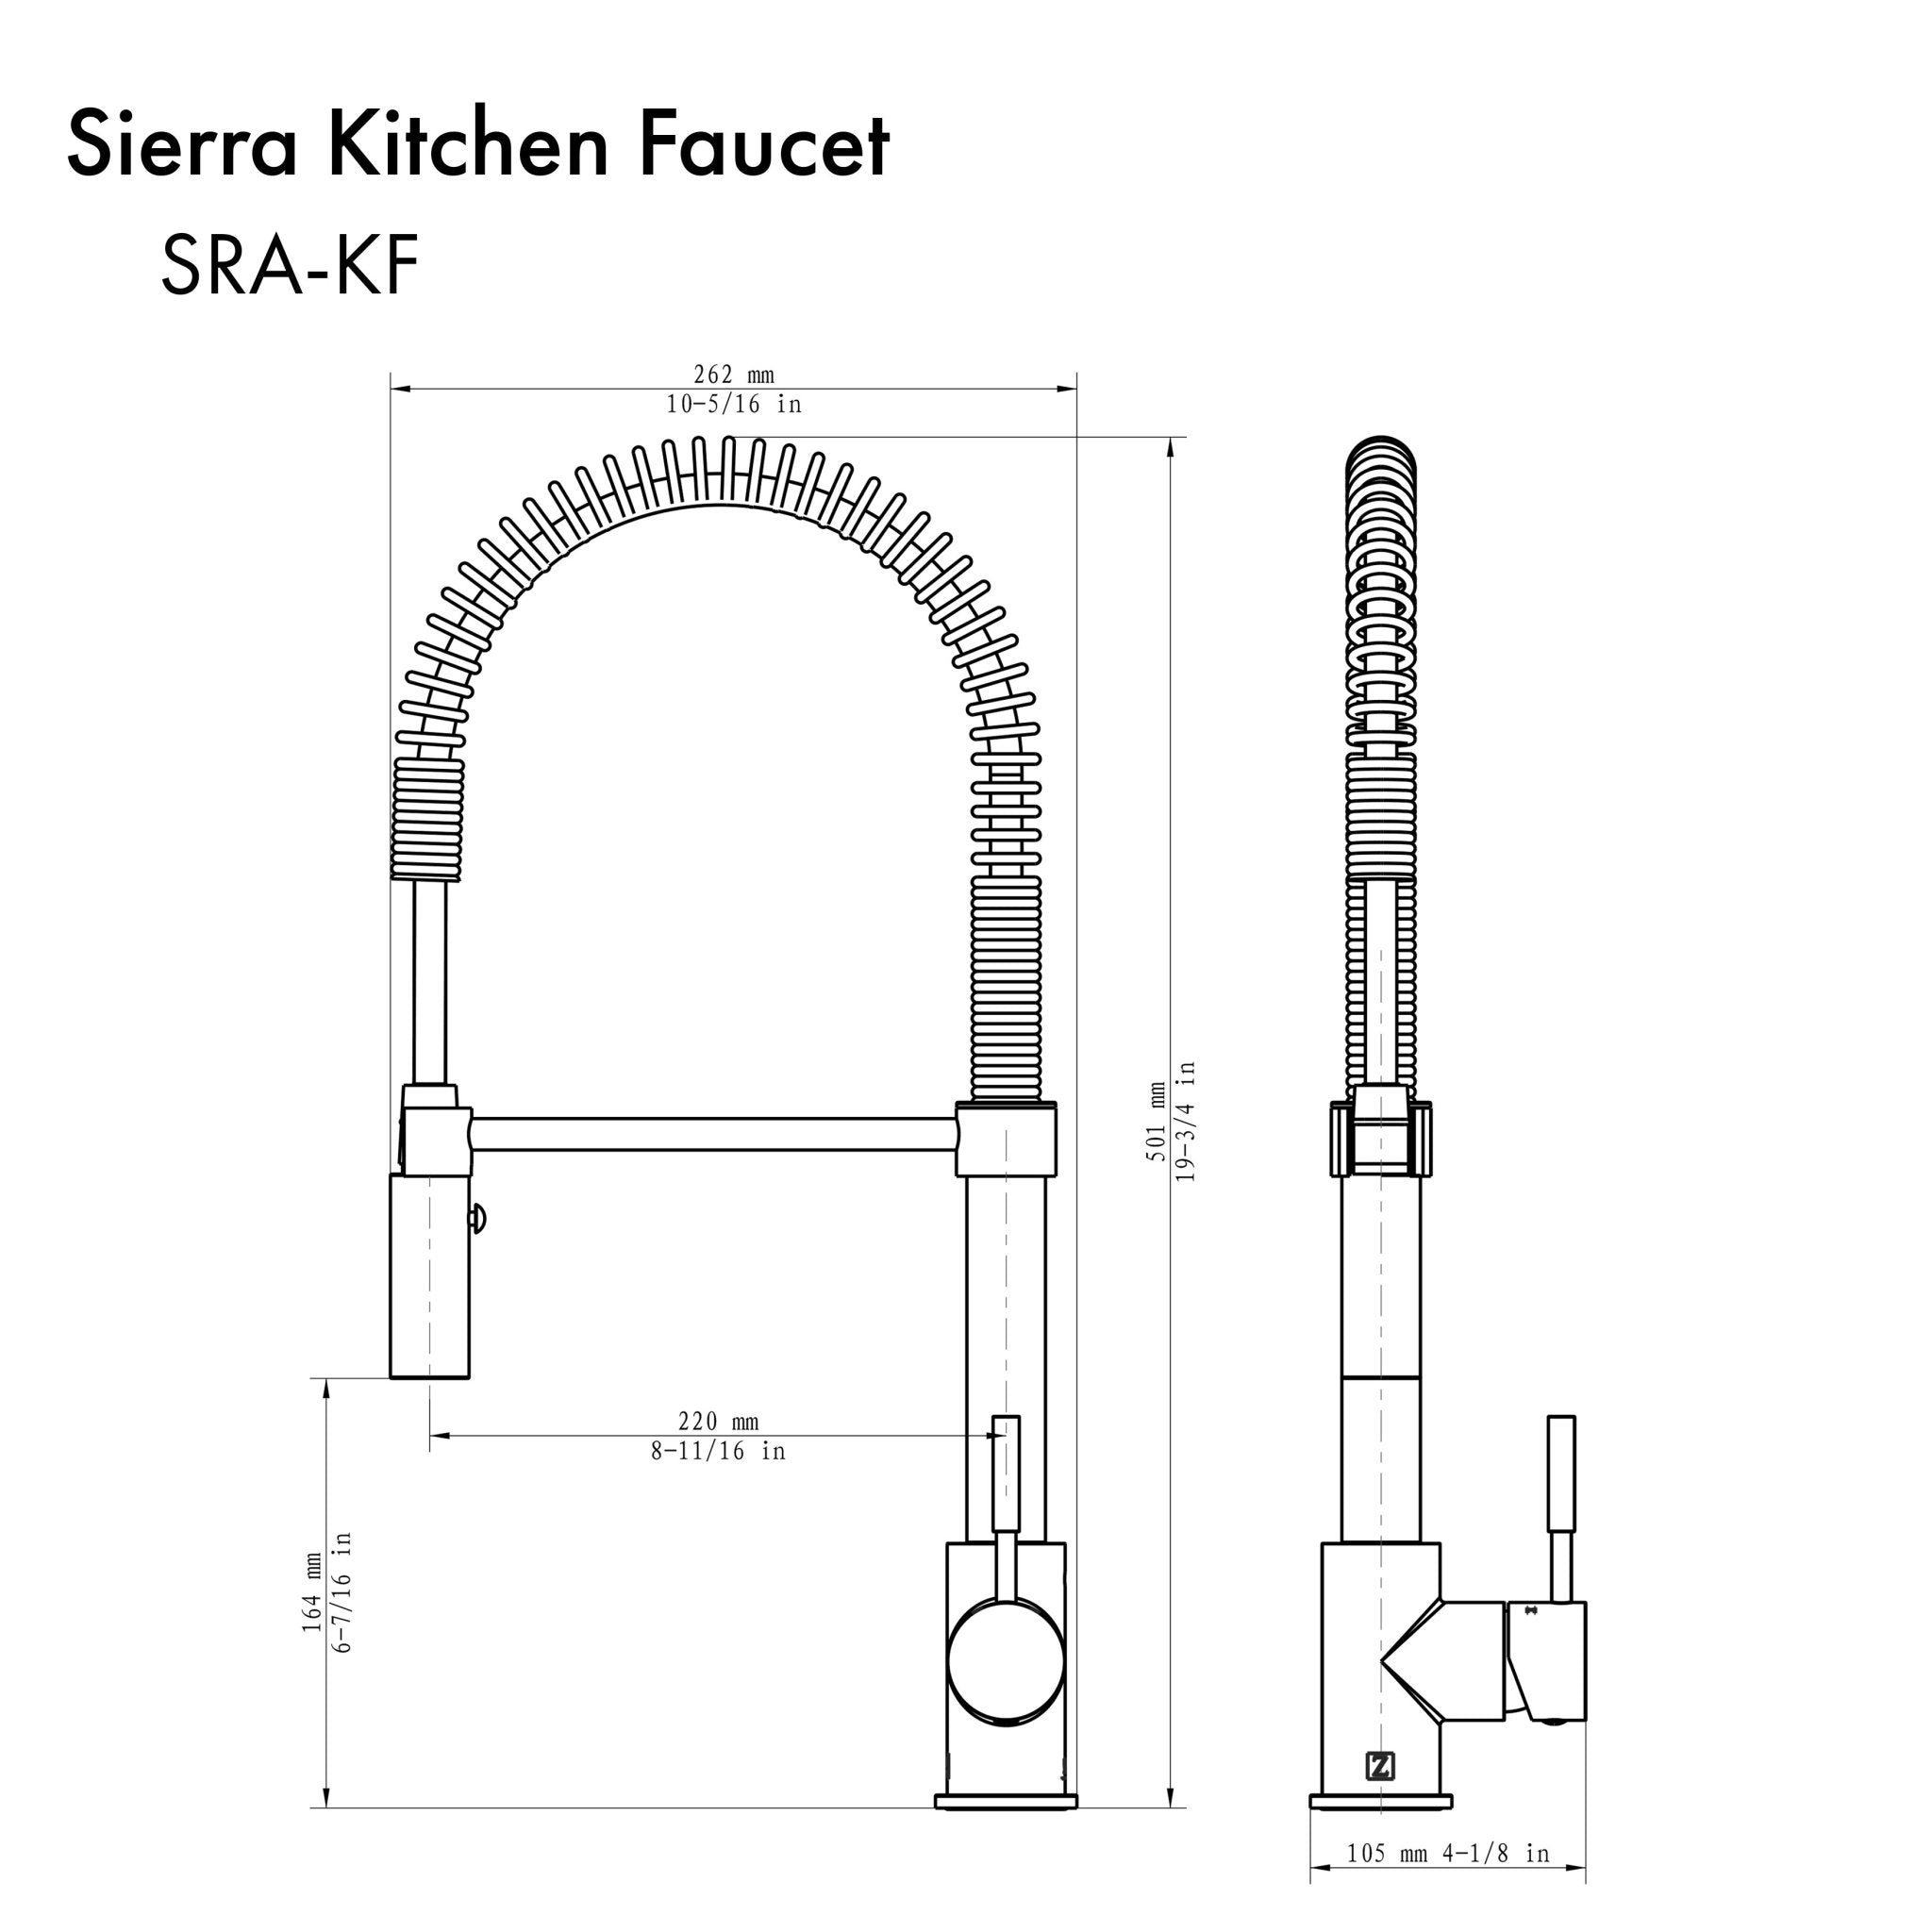 ZLINE Sierra Kitchen Faucet (SRA-KF) Dimensions and Measurements